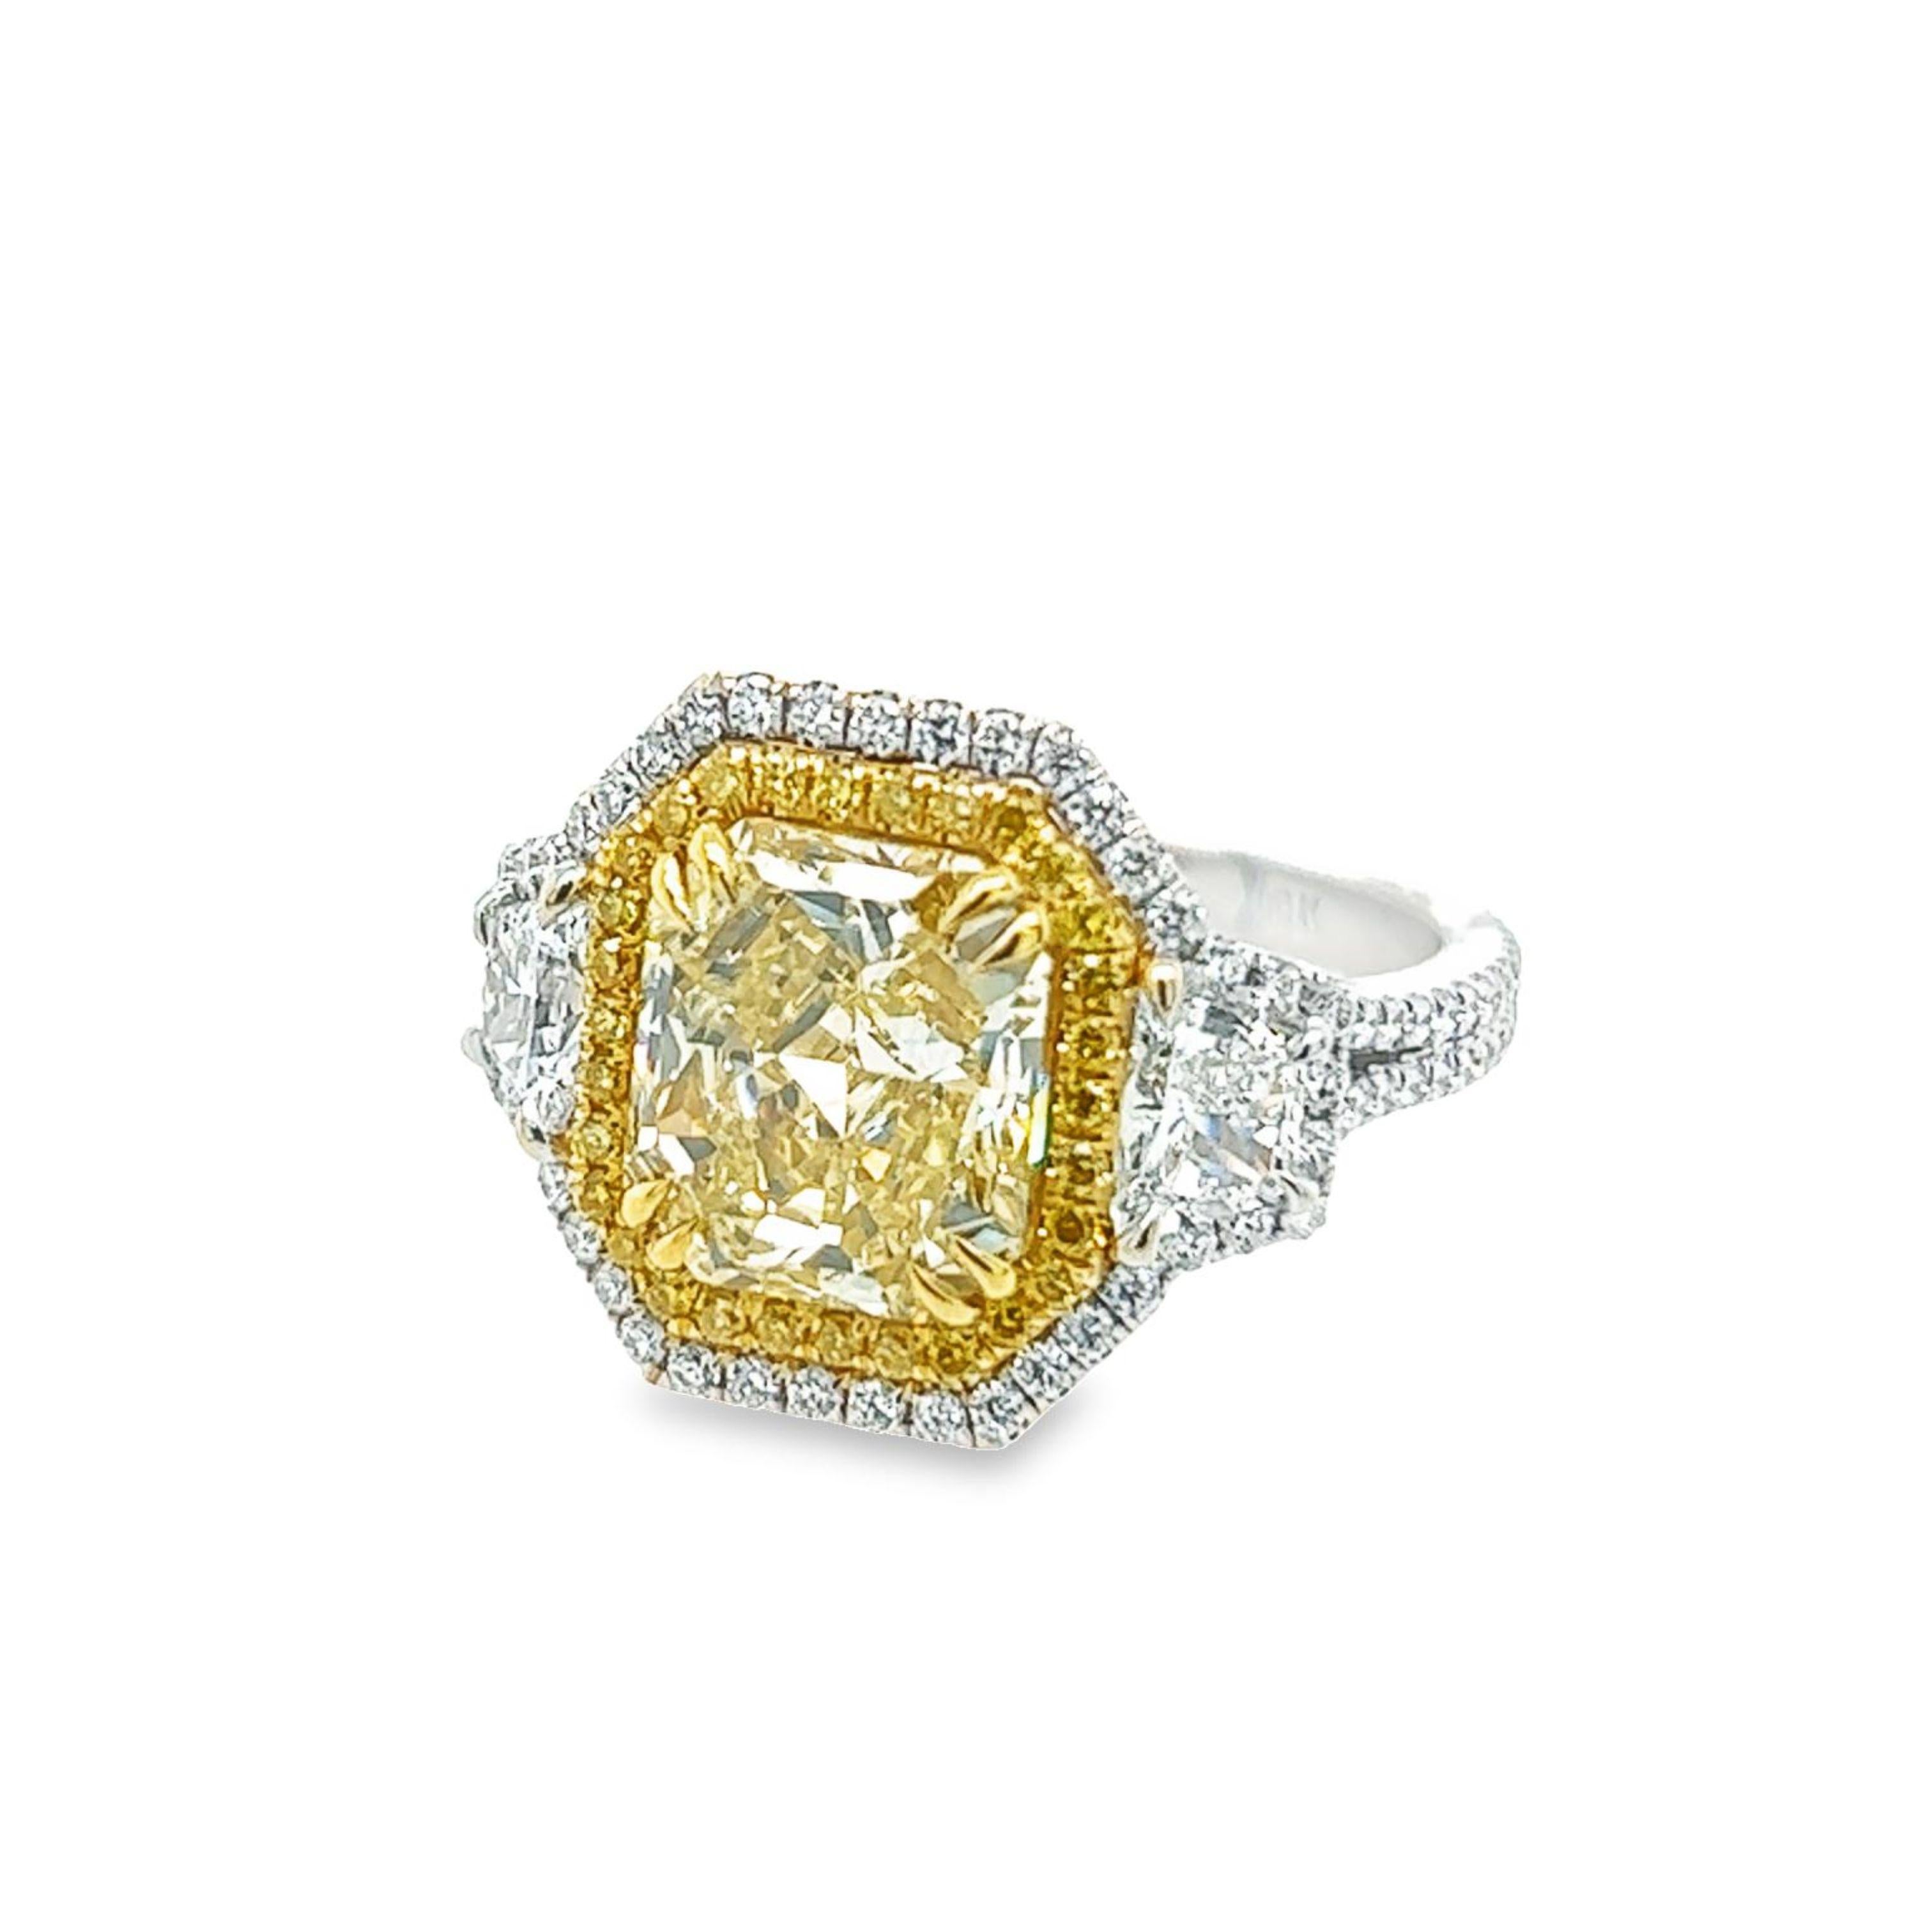 David Rosenberg Verlobungsring mit 3,67 Karat strahlendem gelbem VVS2 GIA Diamant im Angebot 2